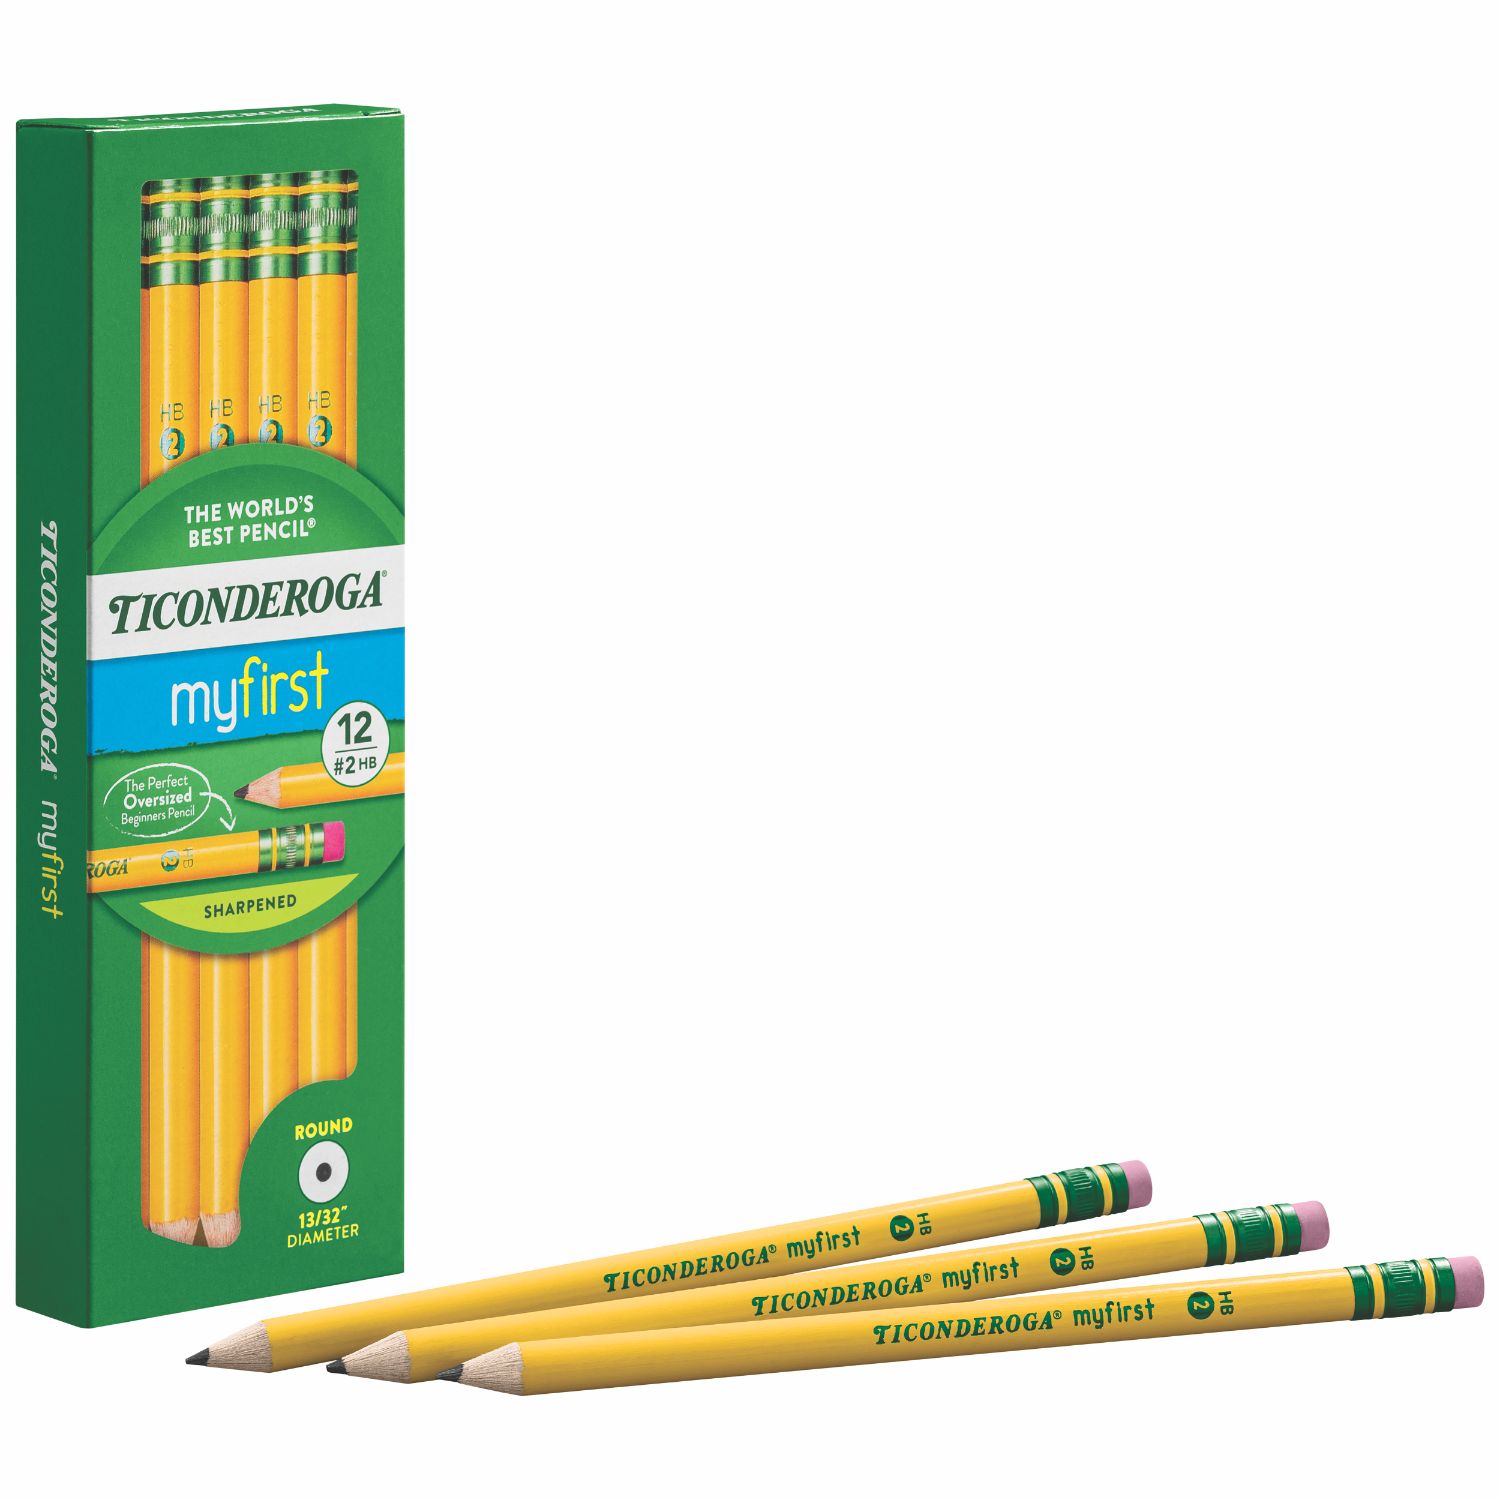 TICONDEROGA Beginner Pencils, Wood-Cased #2 HB Soft, With Eraser